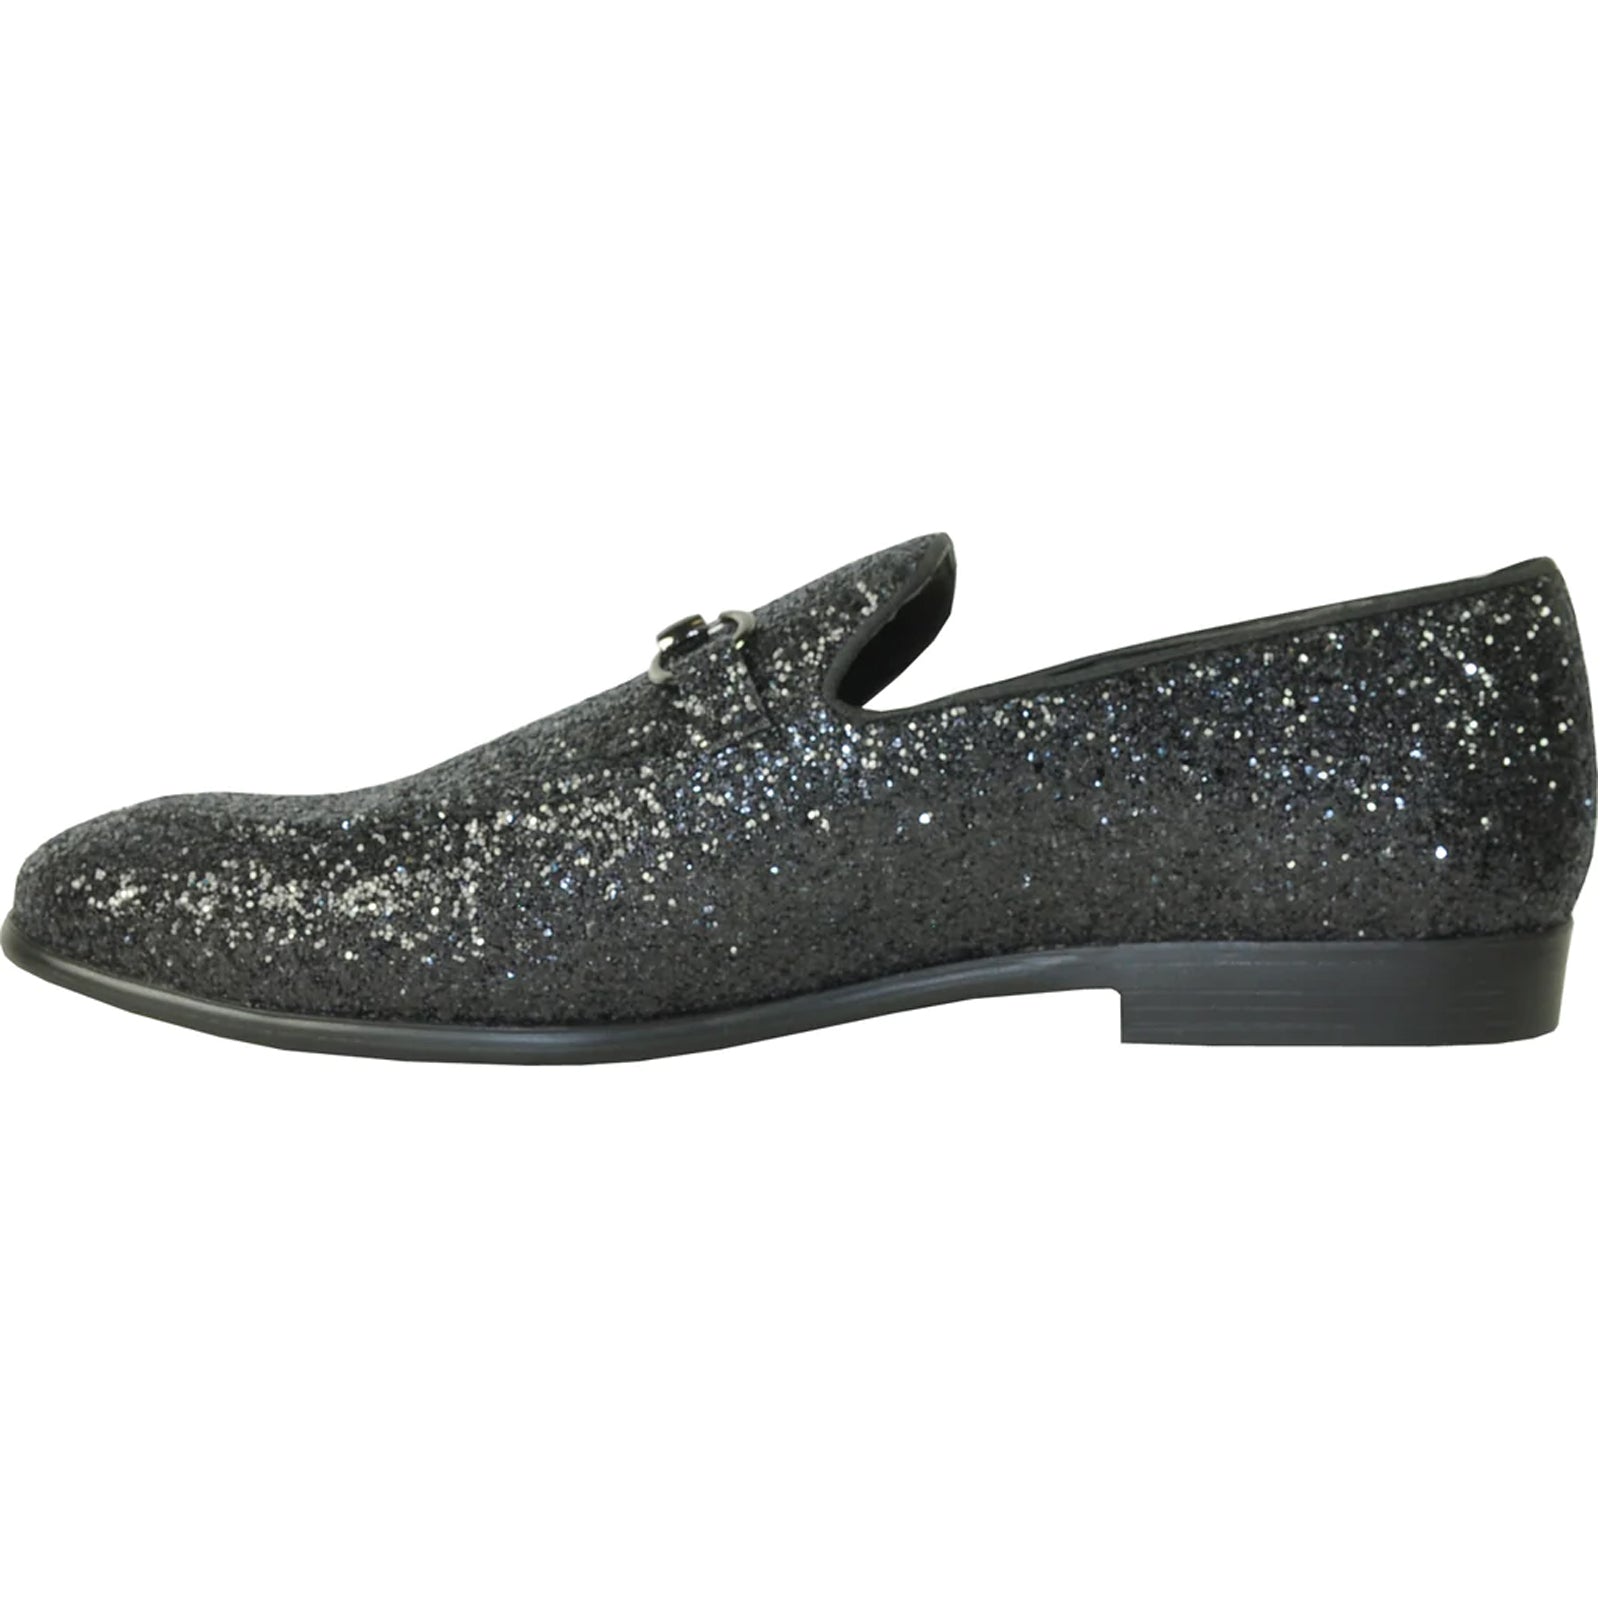 "Black Sequin Prom Tuxedo Loafer - Modern Men's Glitter Footwear"